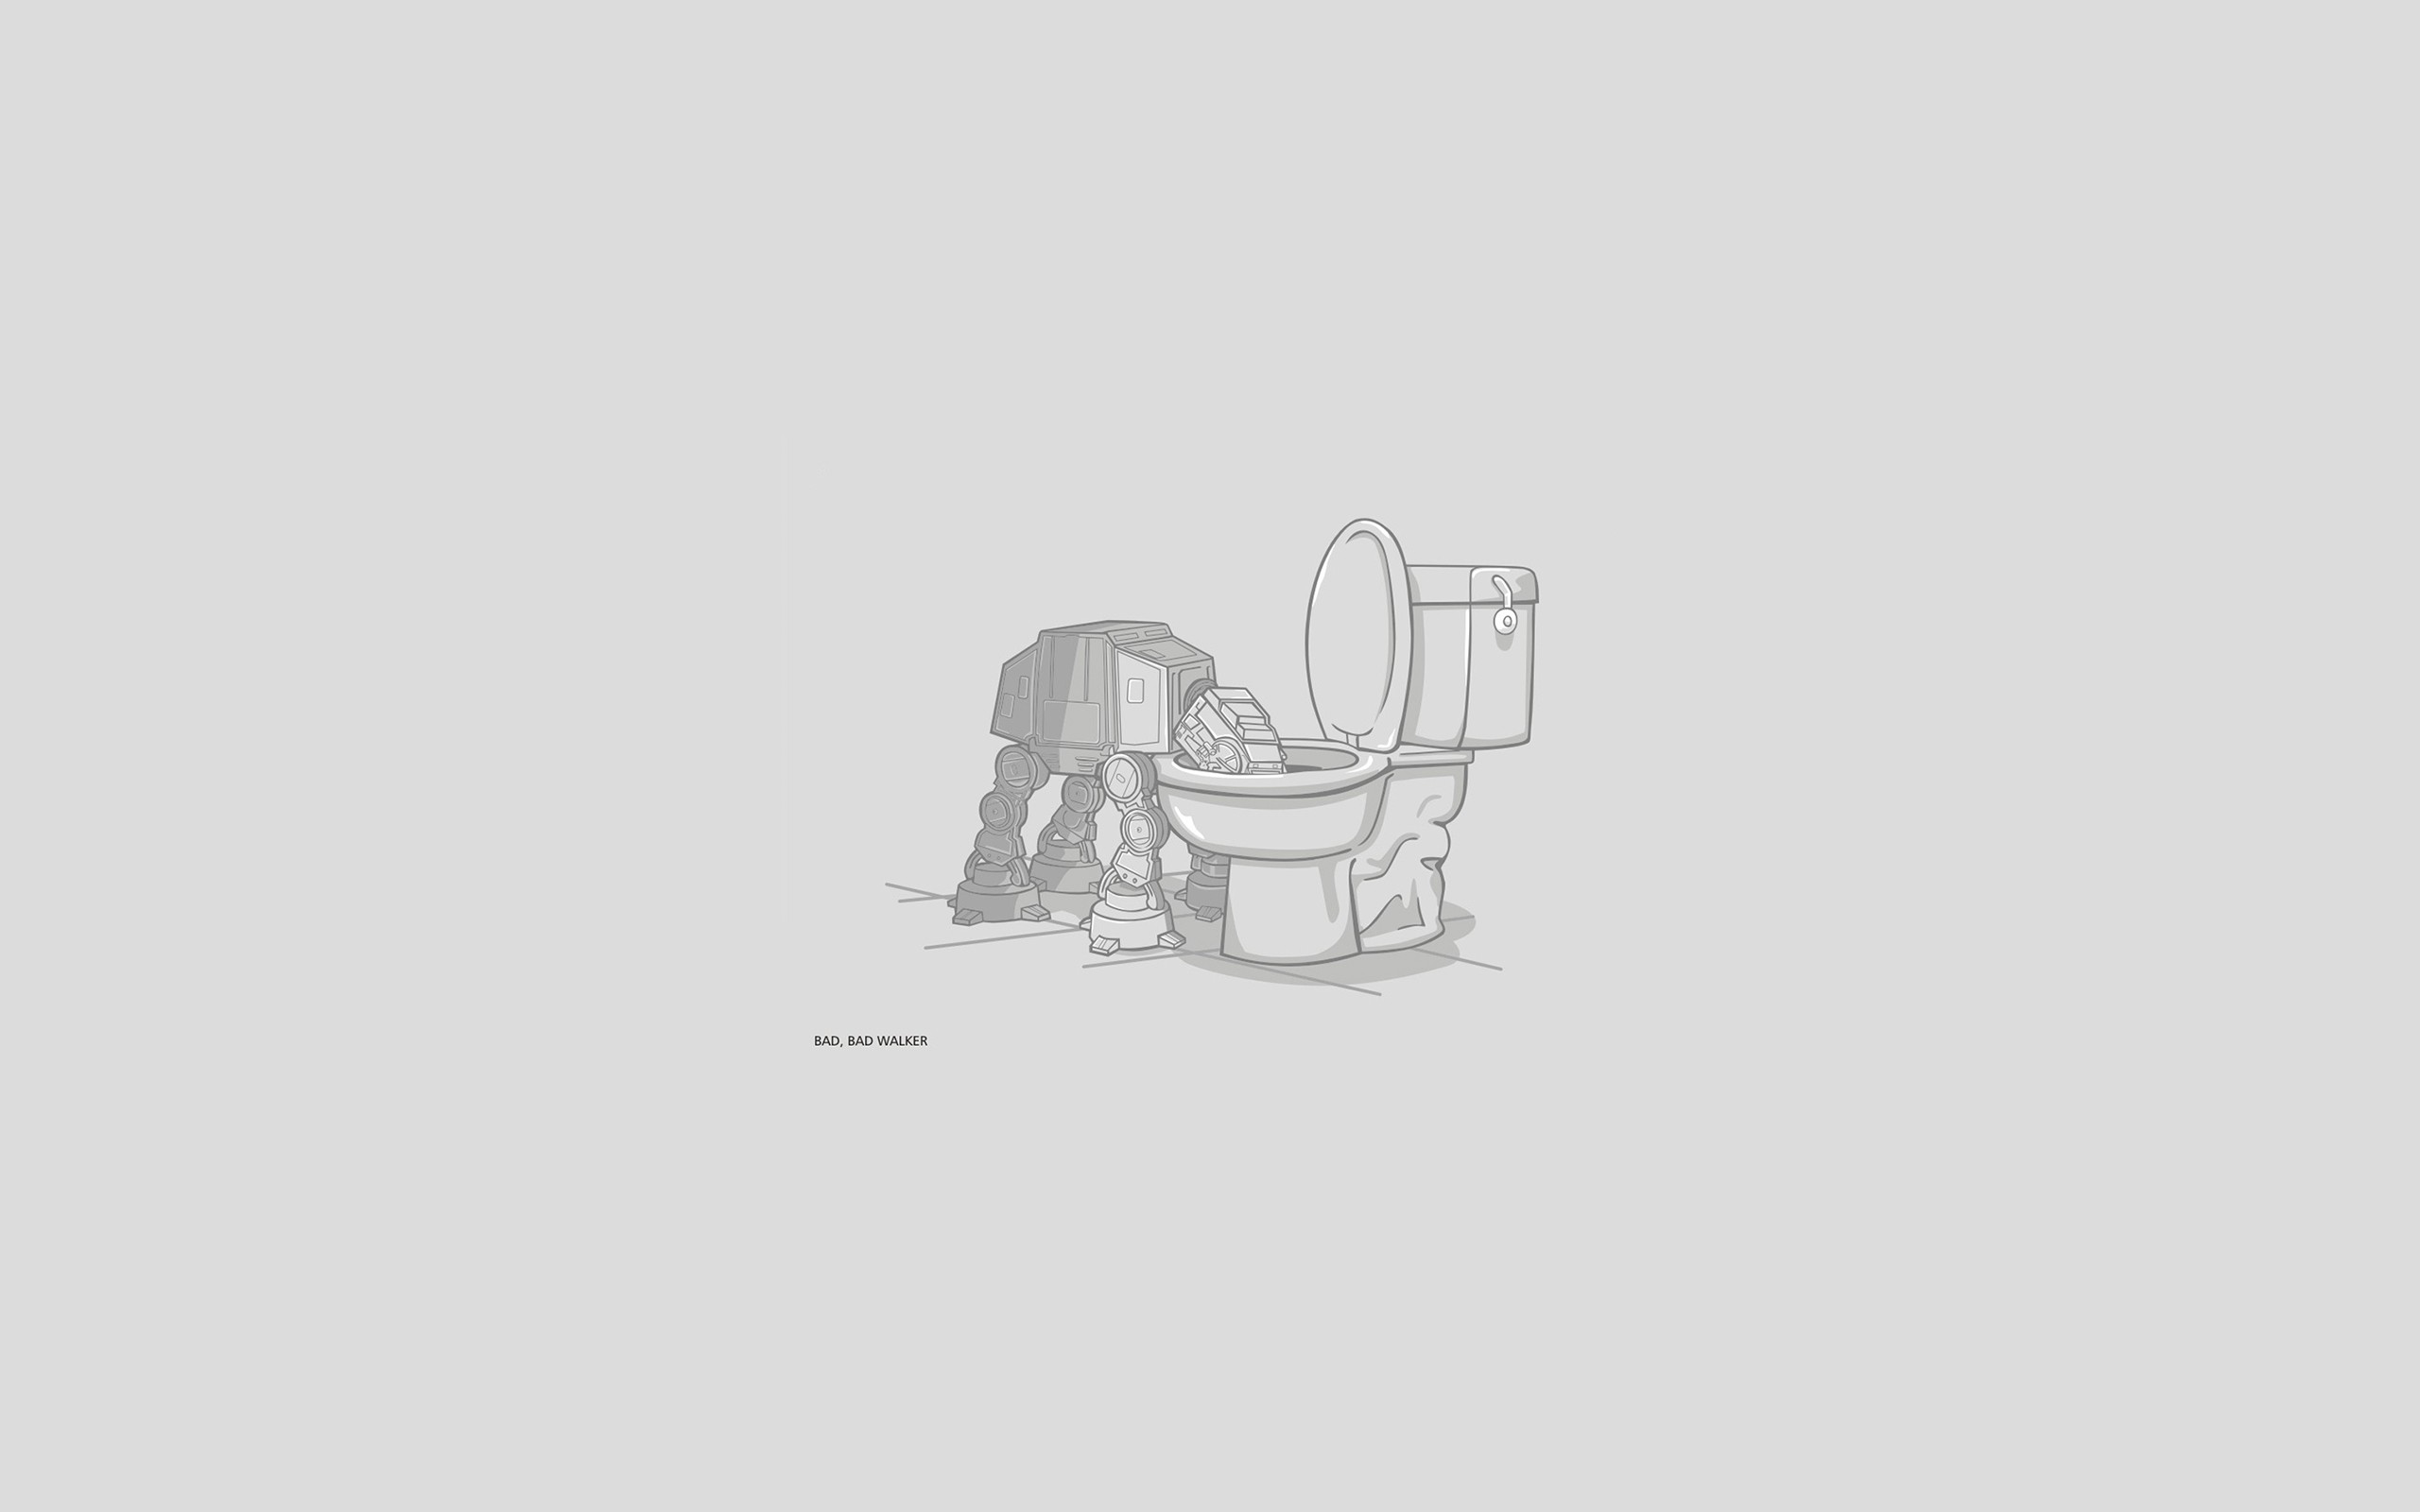 General 2560x1600 Star Wars toilets minimalism humor AT-AT simple background Star Wars Humor monochrome